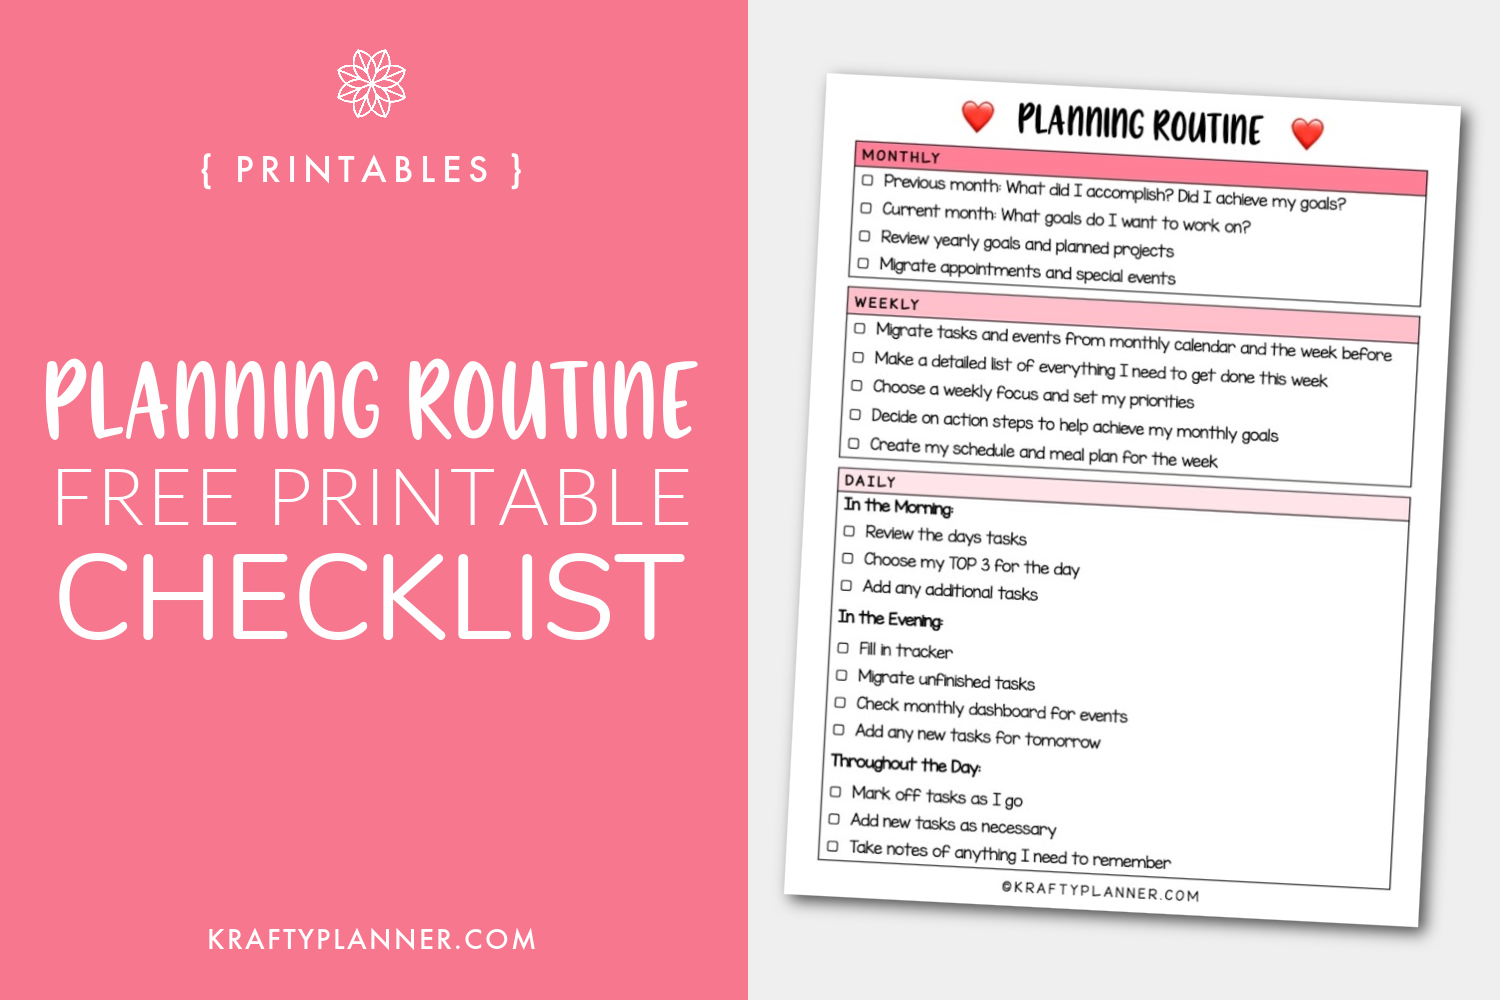 Planning Routine Free Printable Checklist